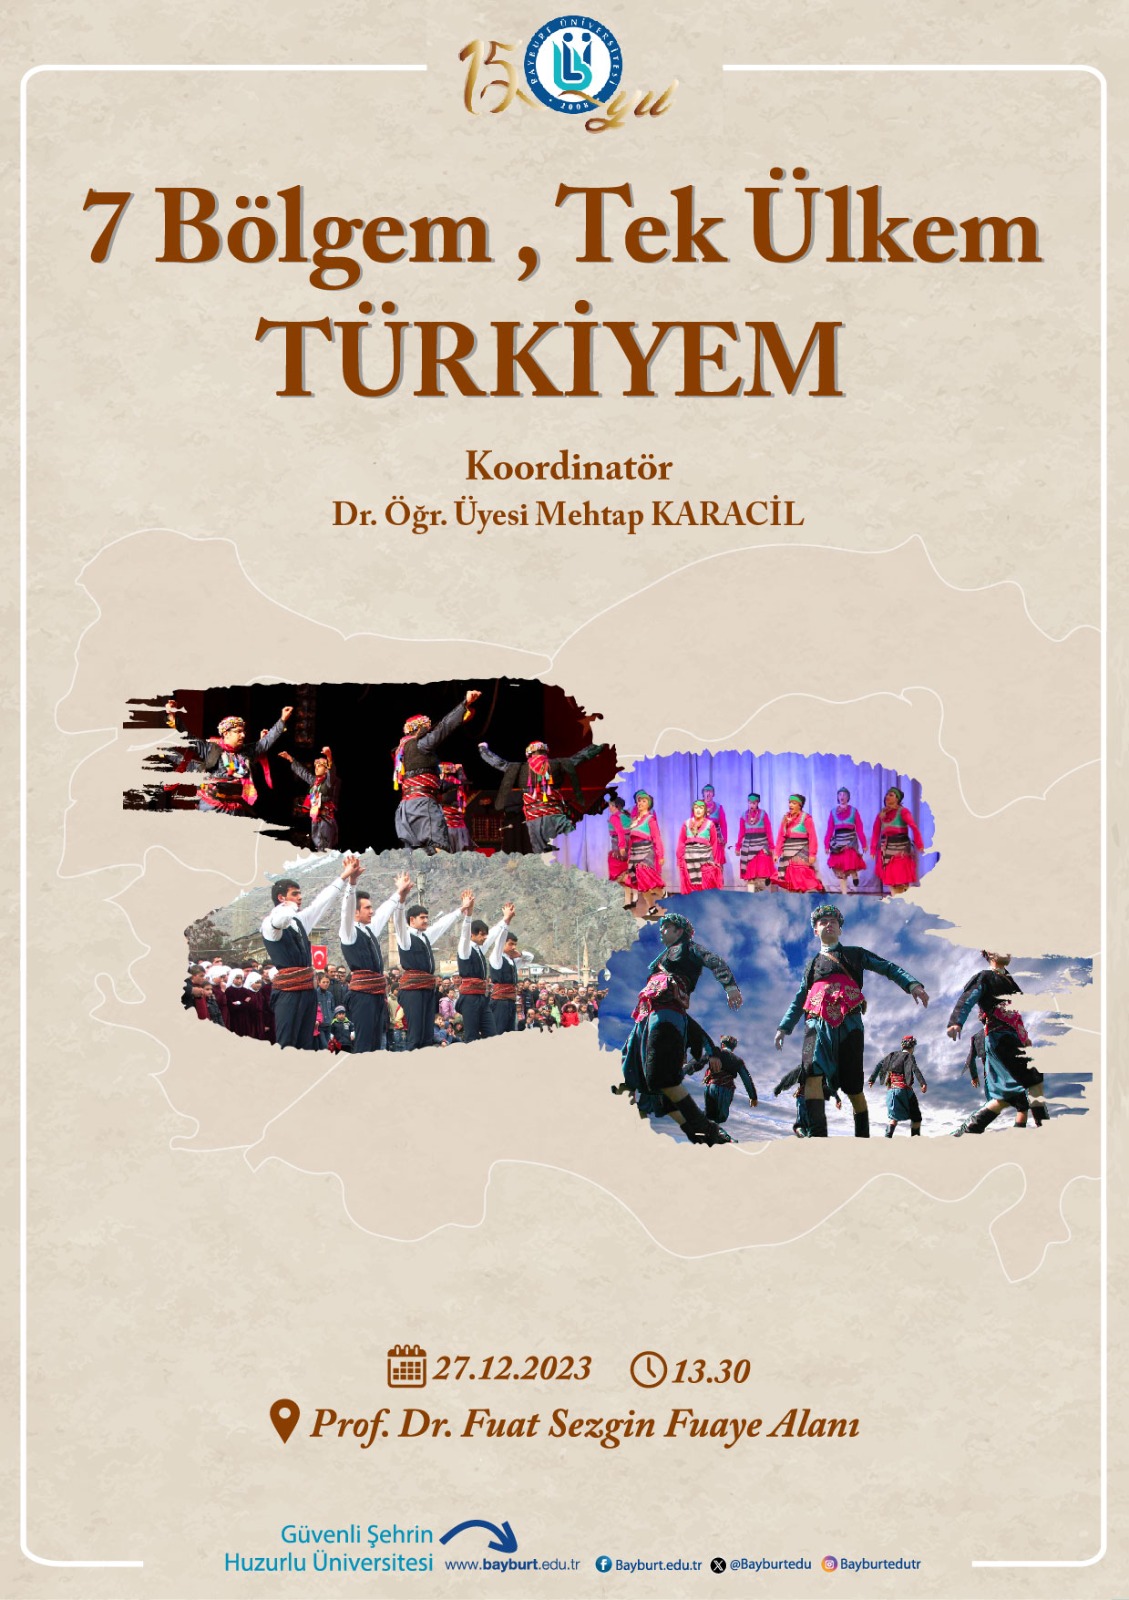 My 7 Regions, My Only Country İs Türkiye